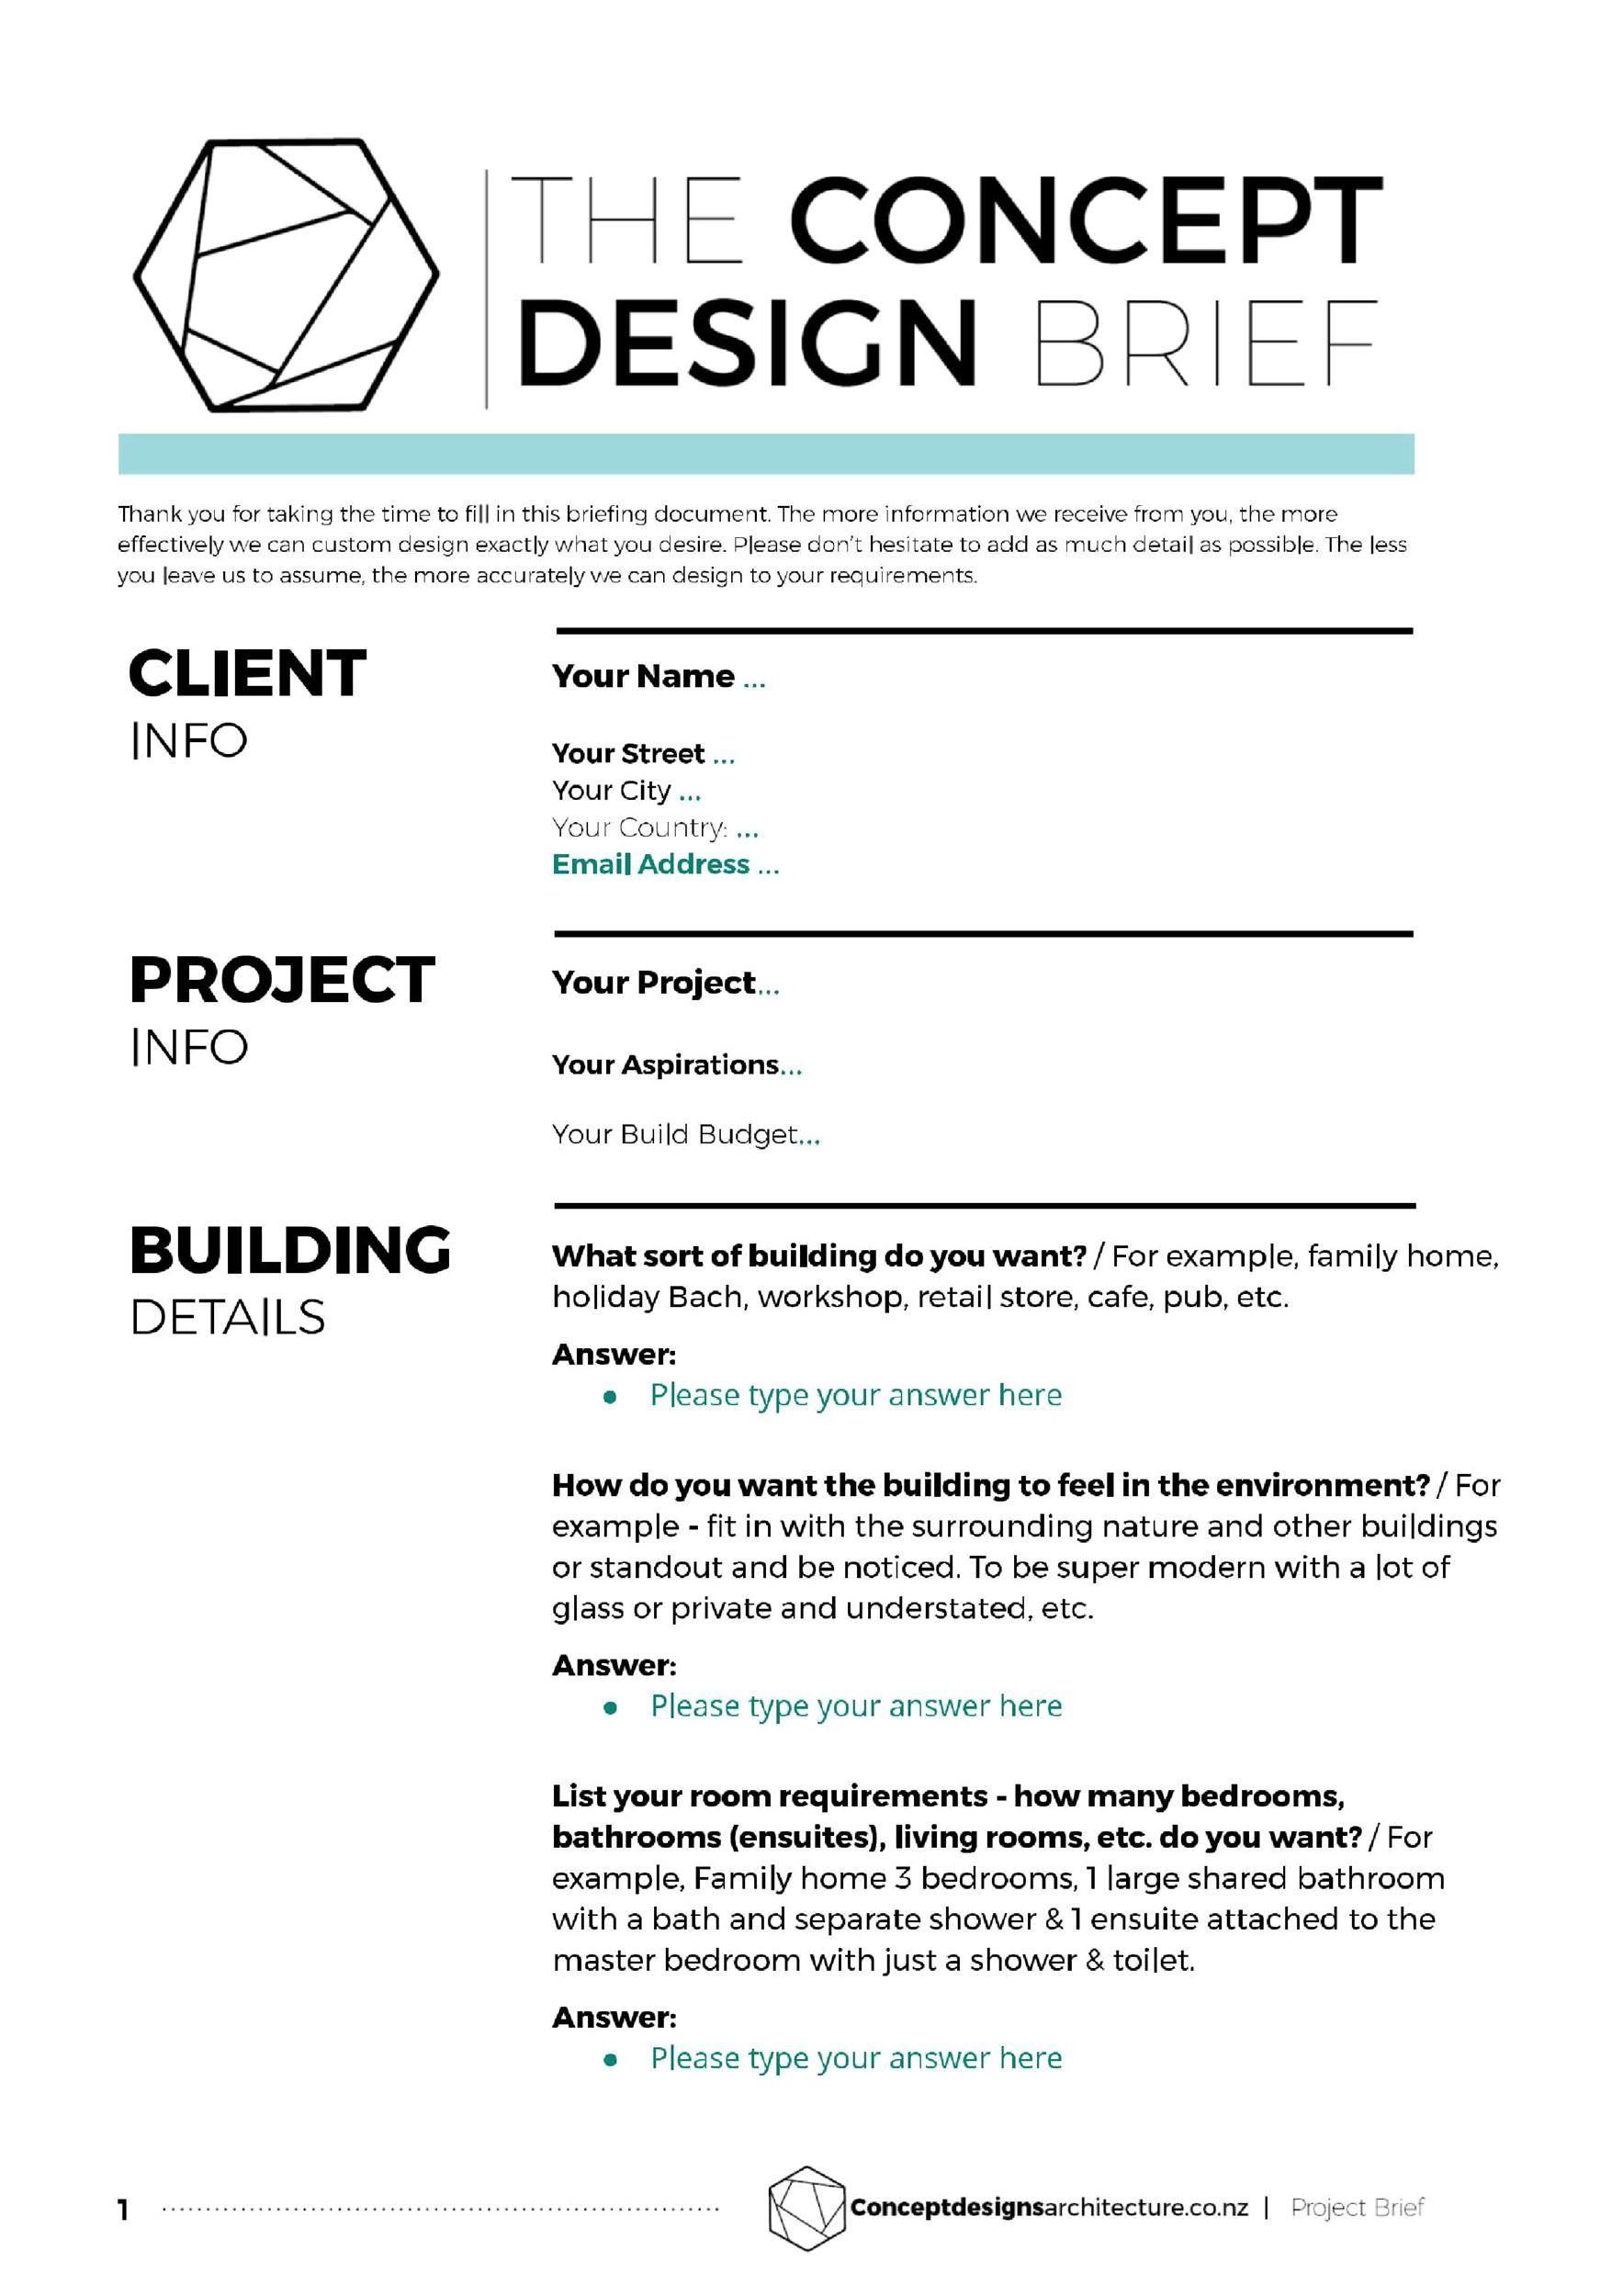 50 Useful Design Brief Templates (Free Creative Brief) ᐅ TemplateLab